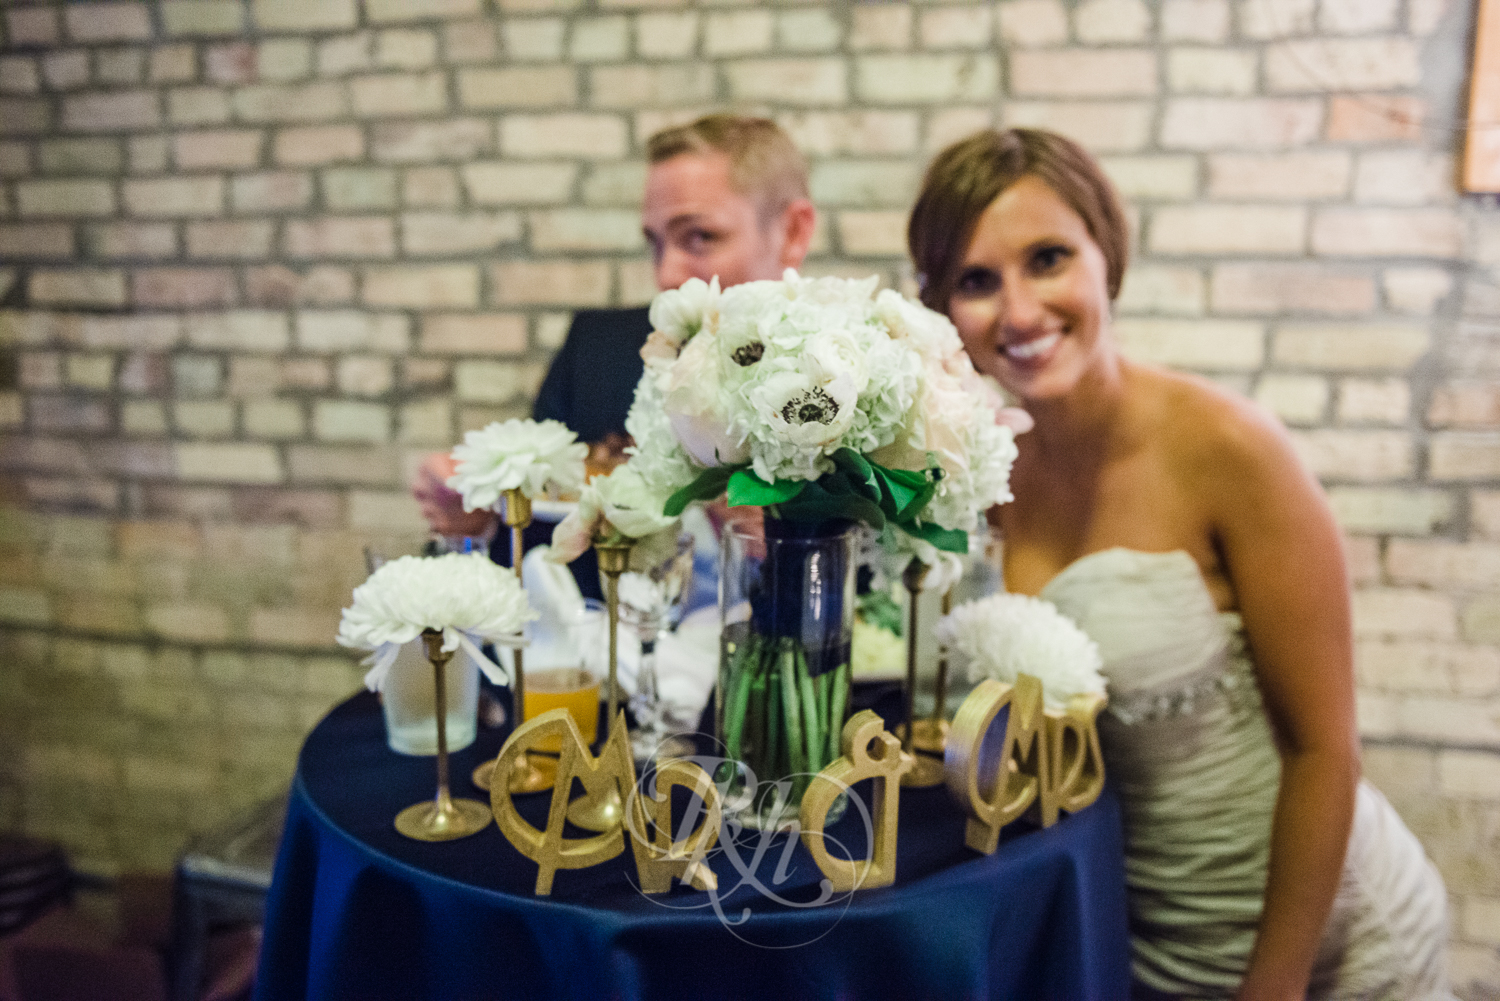  Minneapolis Wedding Photography - Becca & Justin - RKH Images-37 